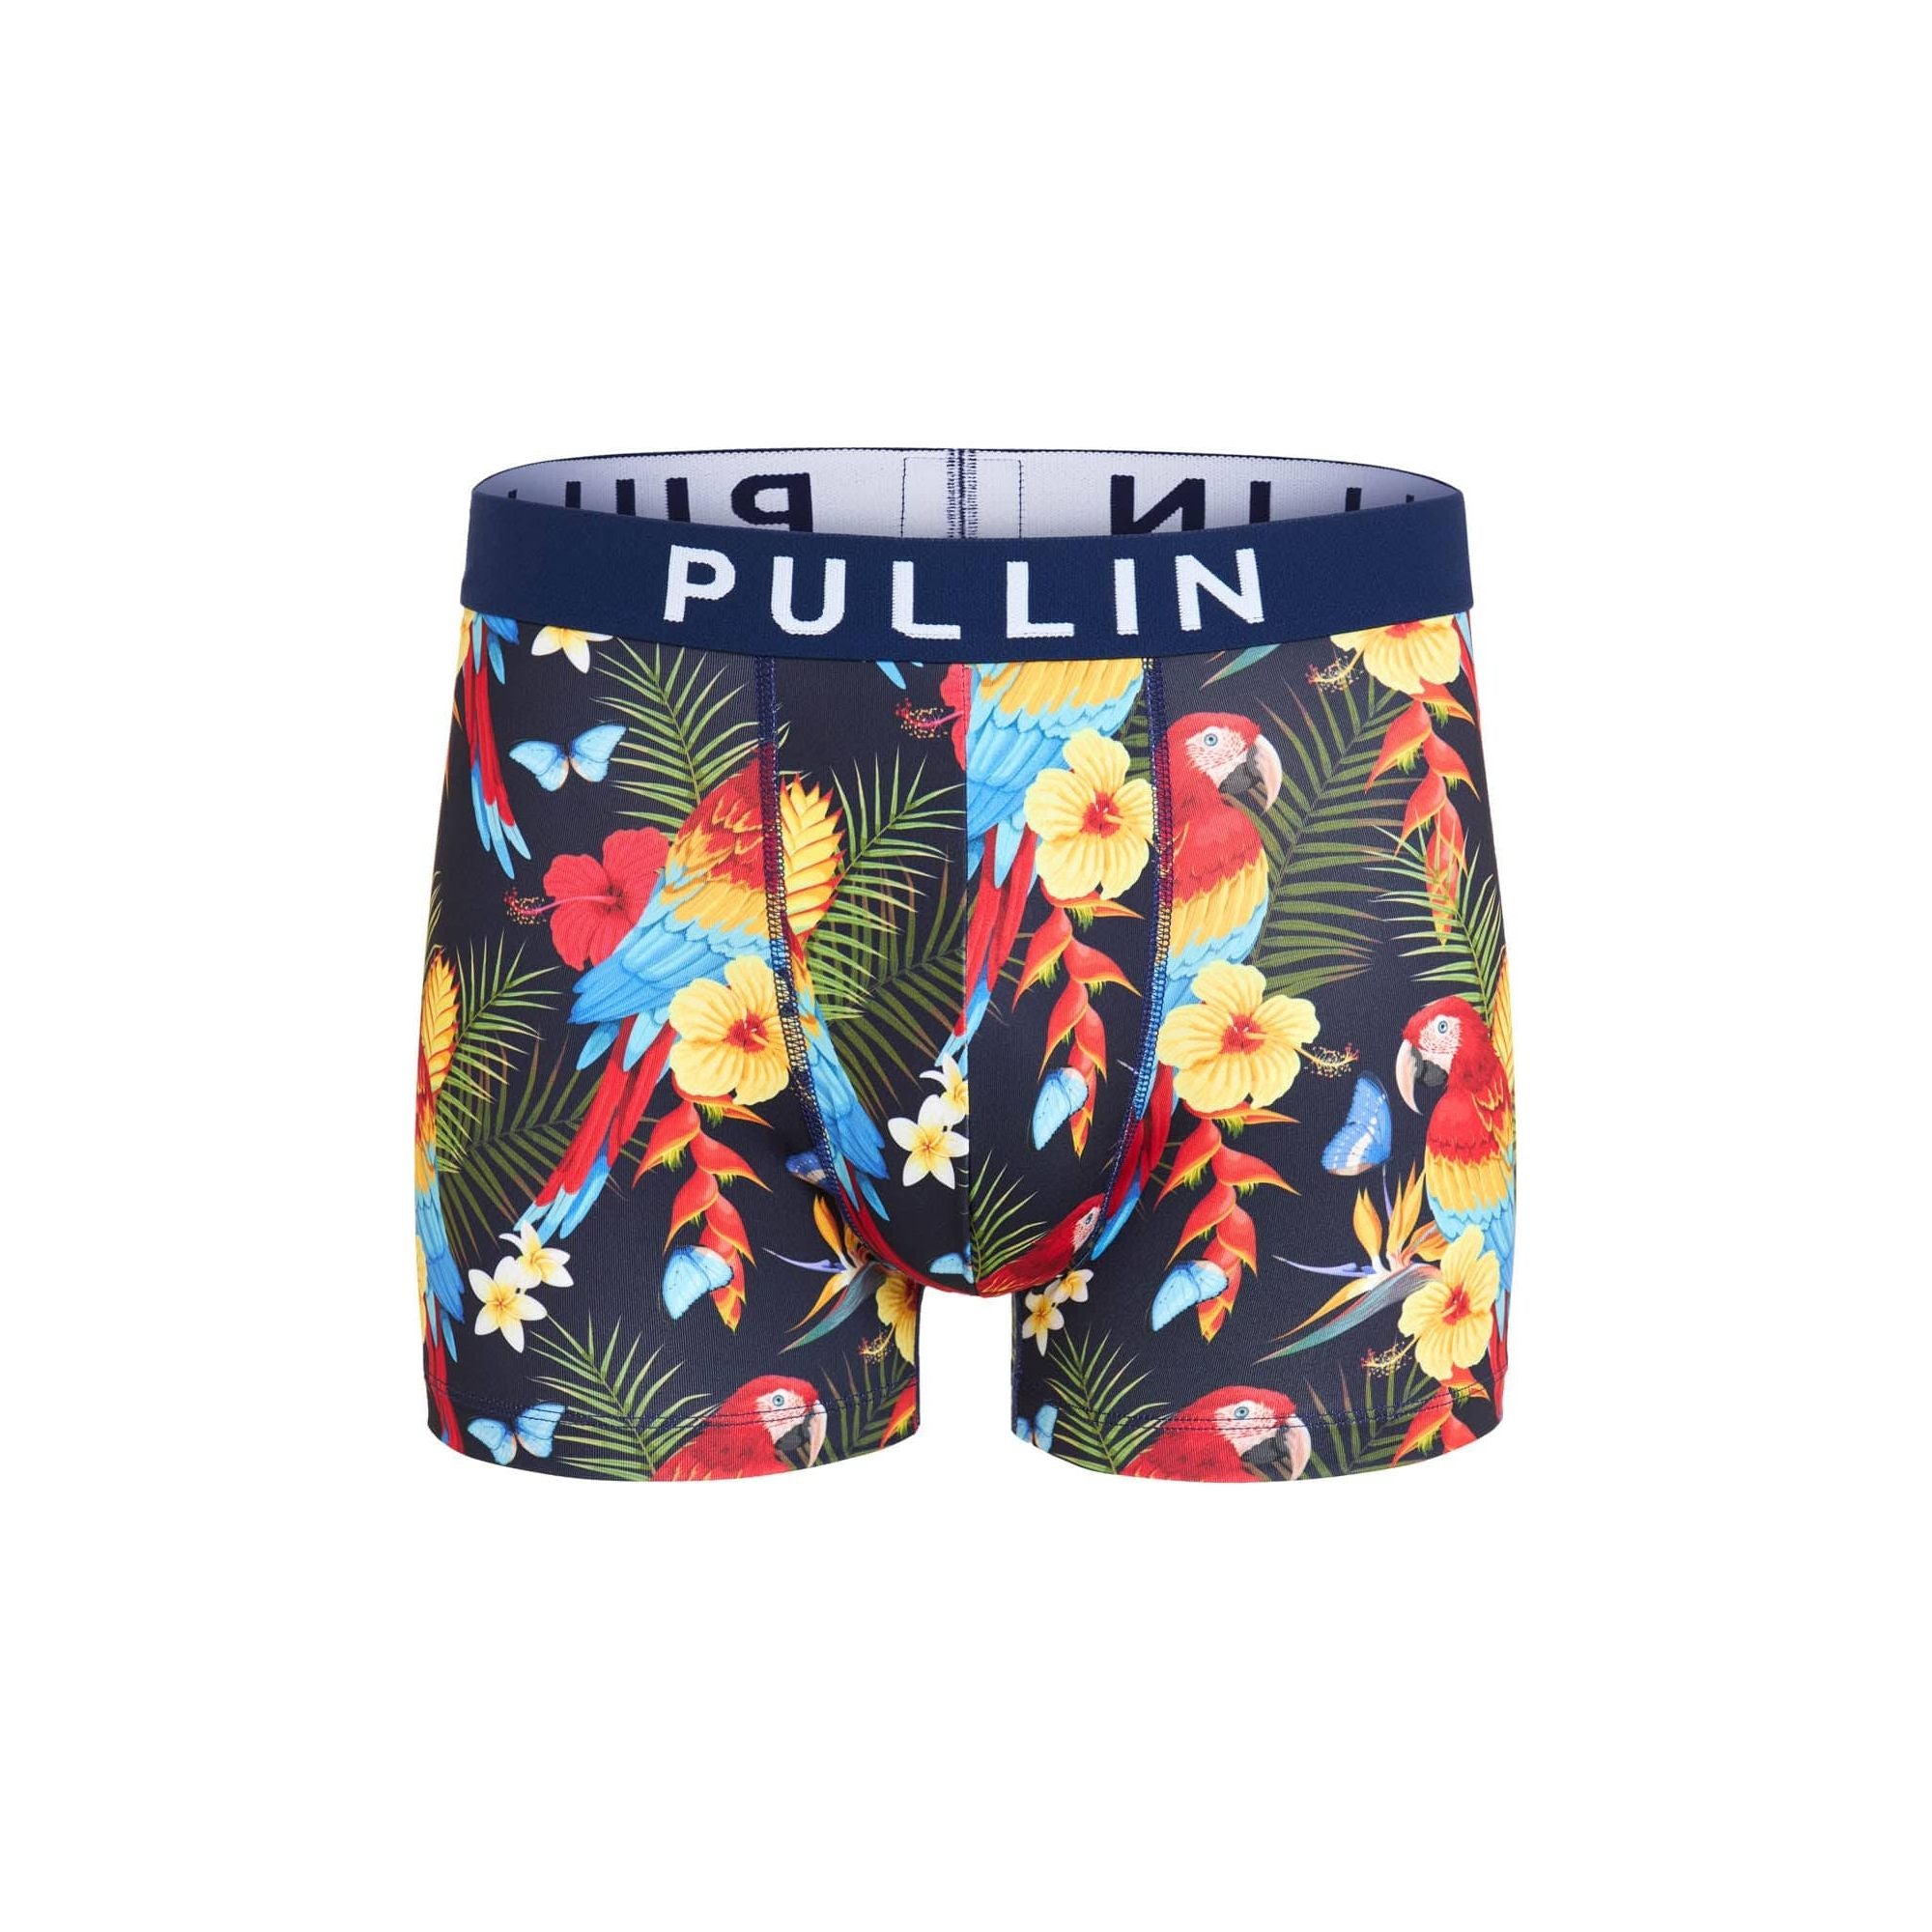 Pullin Fashion 2 Sky21 Boxer Brief - Underground Clothing